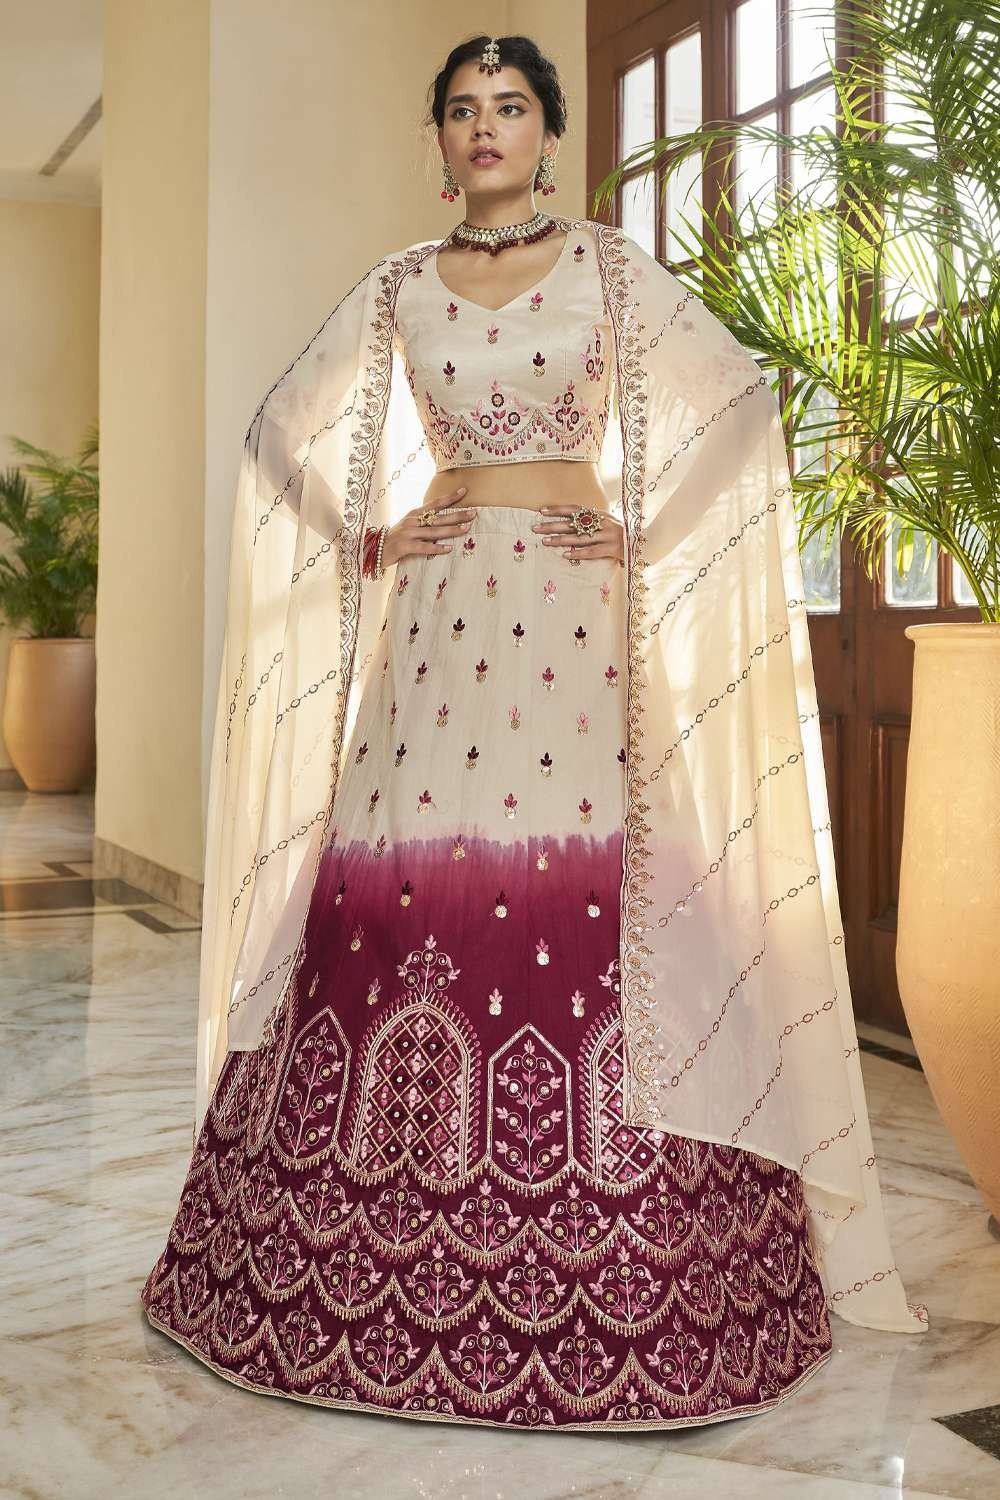 Maroon bridal lehenga | Wedding lehenga designs, Lehenga saree design,  Indian wedding outfits